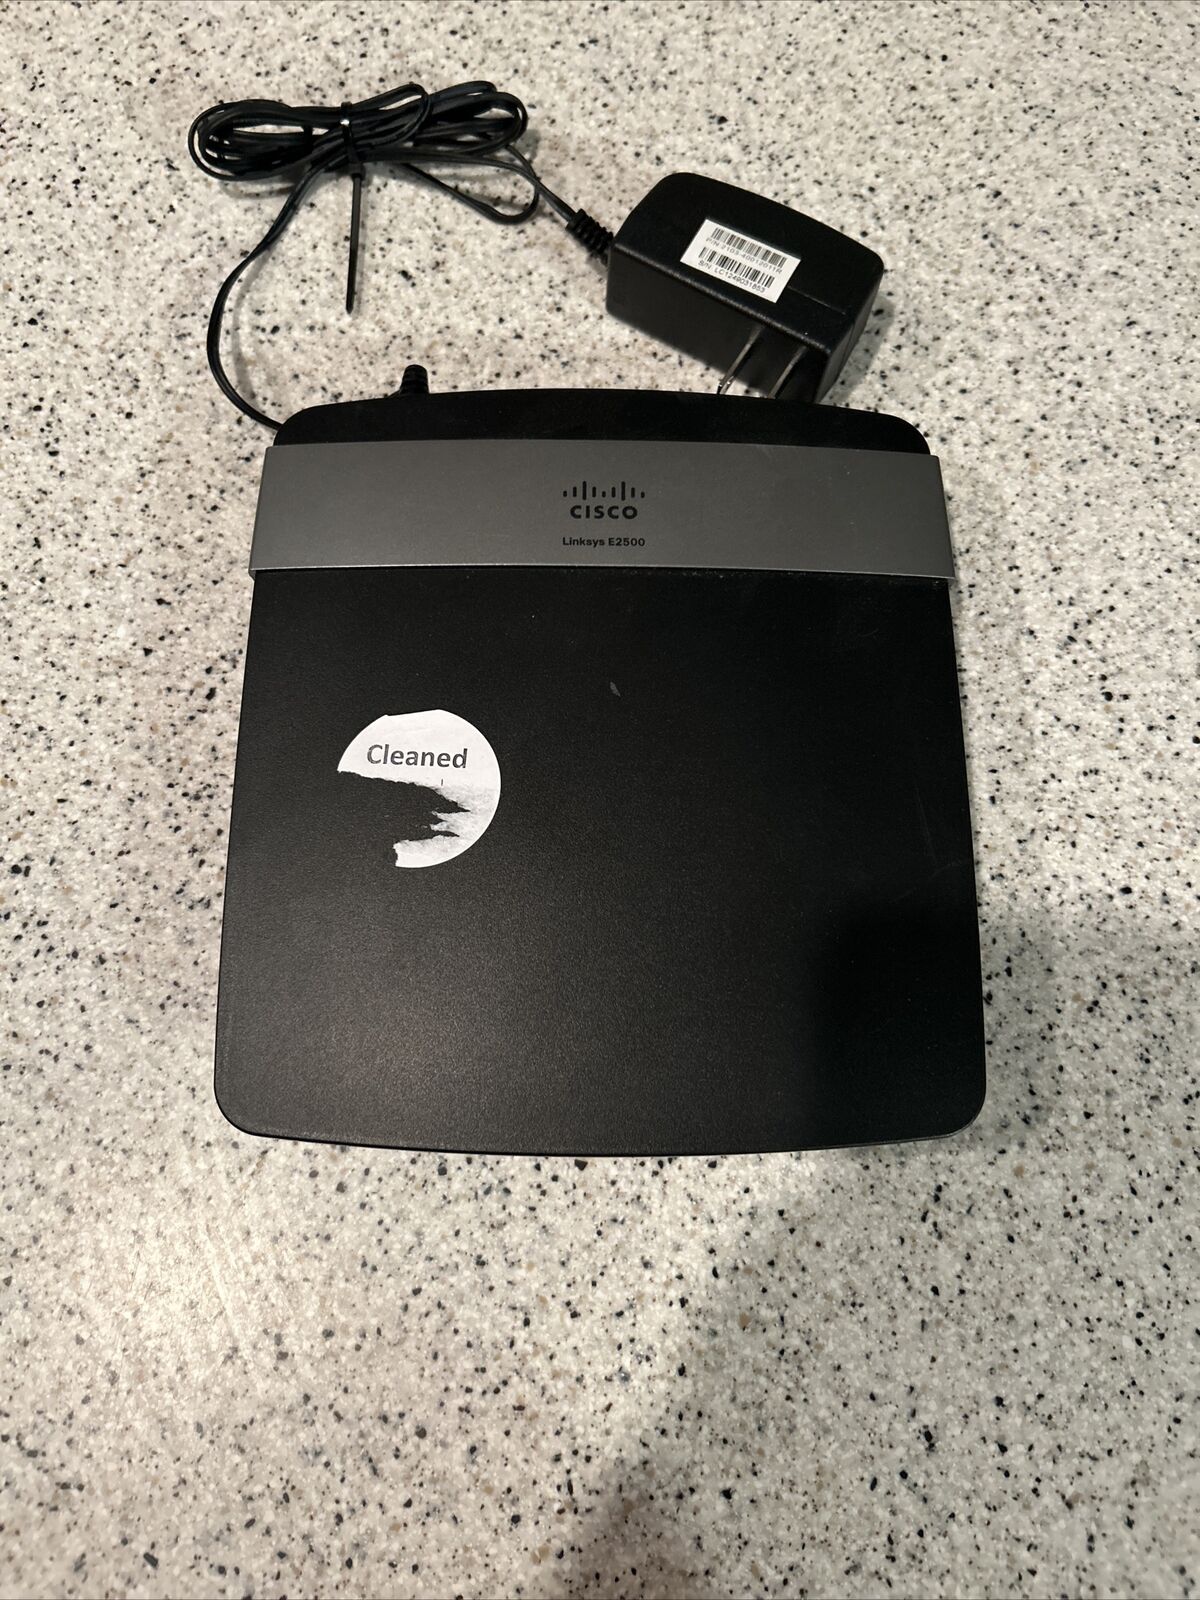 Cisco Linksys E2500 Advanced Dual-Band Wireless-N WIFI 4 Port AA